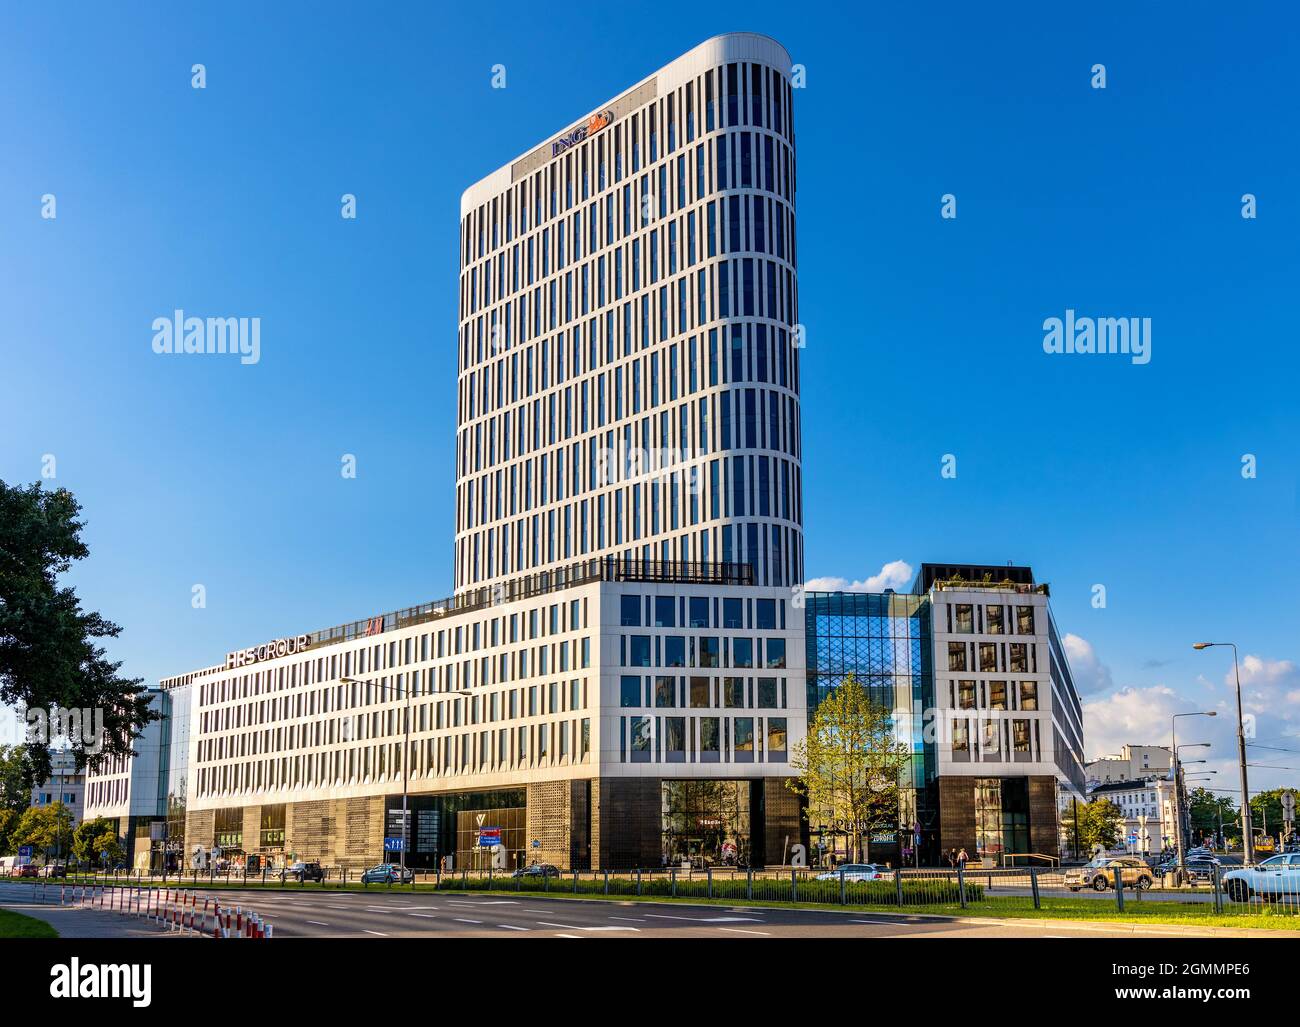 Warszawa poland shopping street hi-res stock photography and images - Alamy